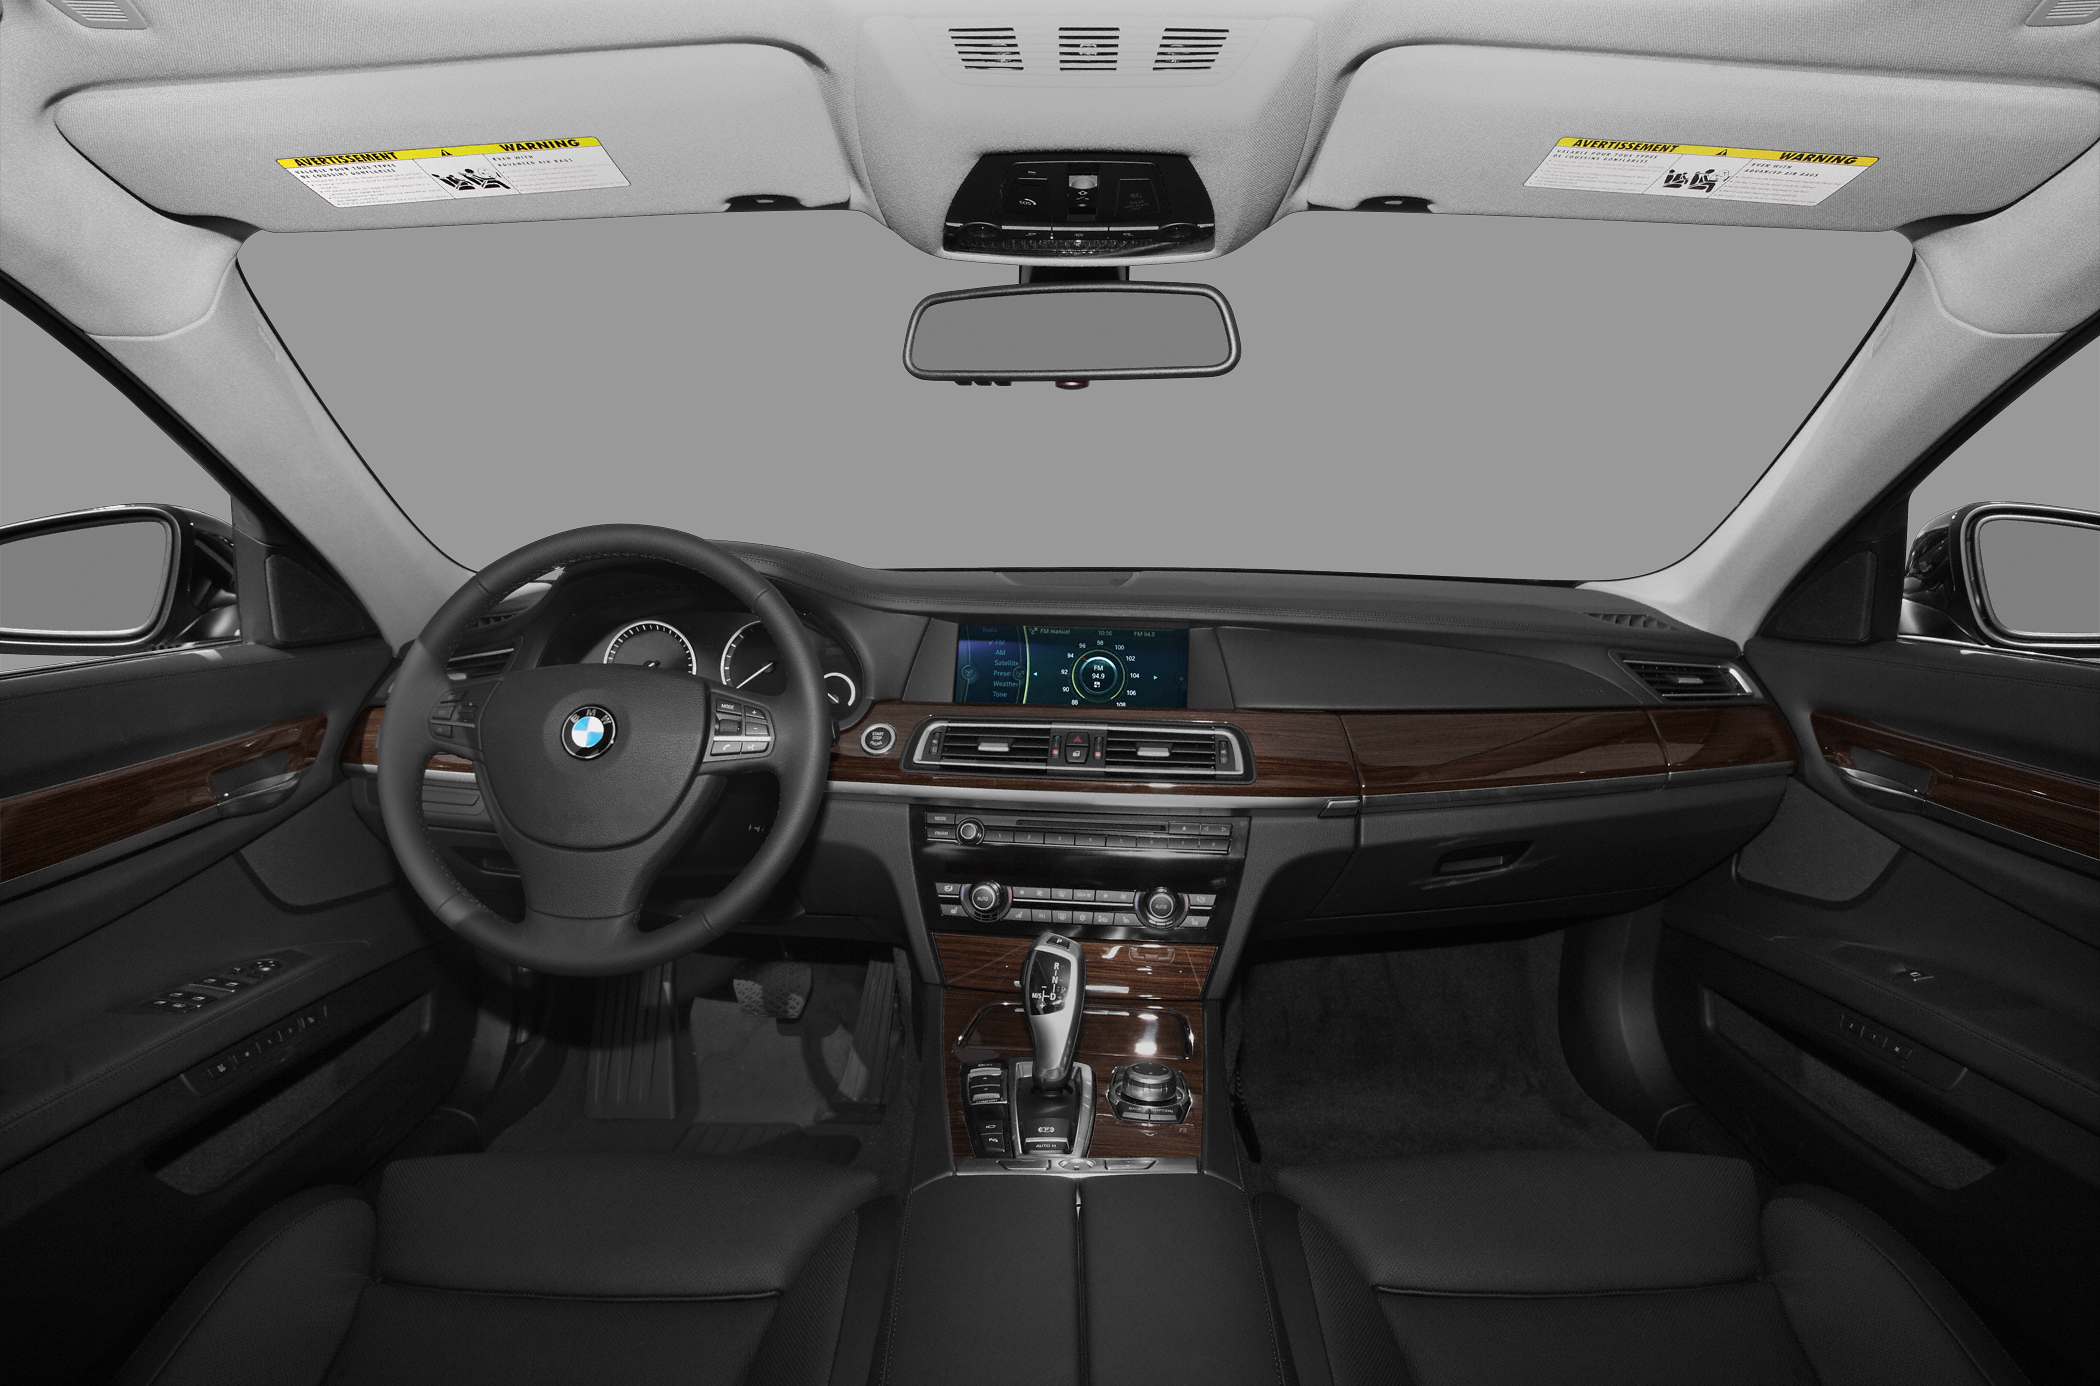 2012 BMW 750